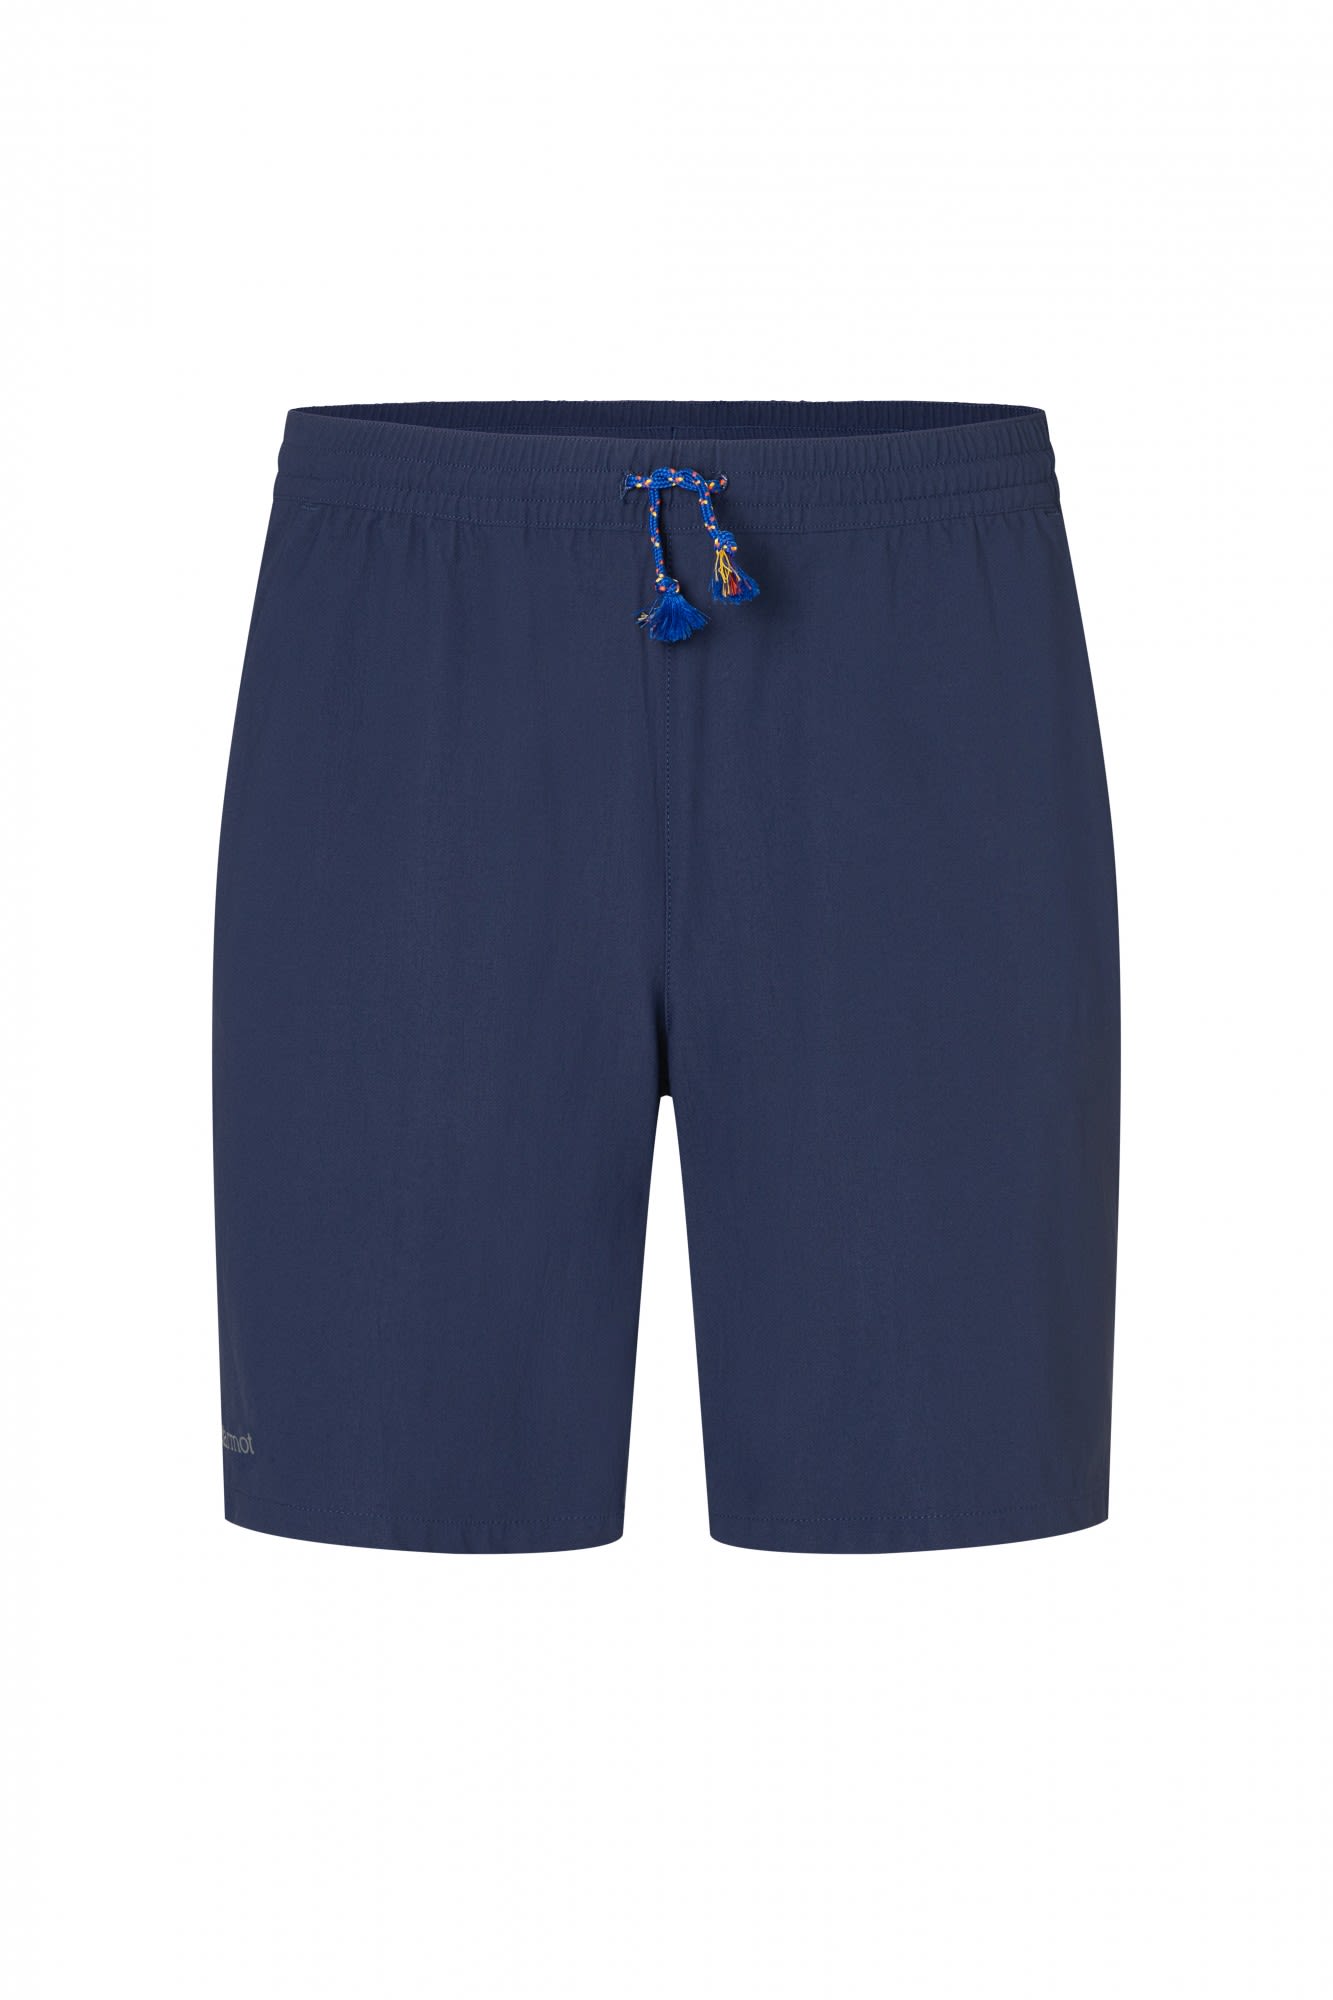 Marmot Elche Short 8 Inch Blau- Male Shorts- Grsse L - Farbe Arctic Navy